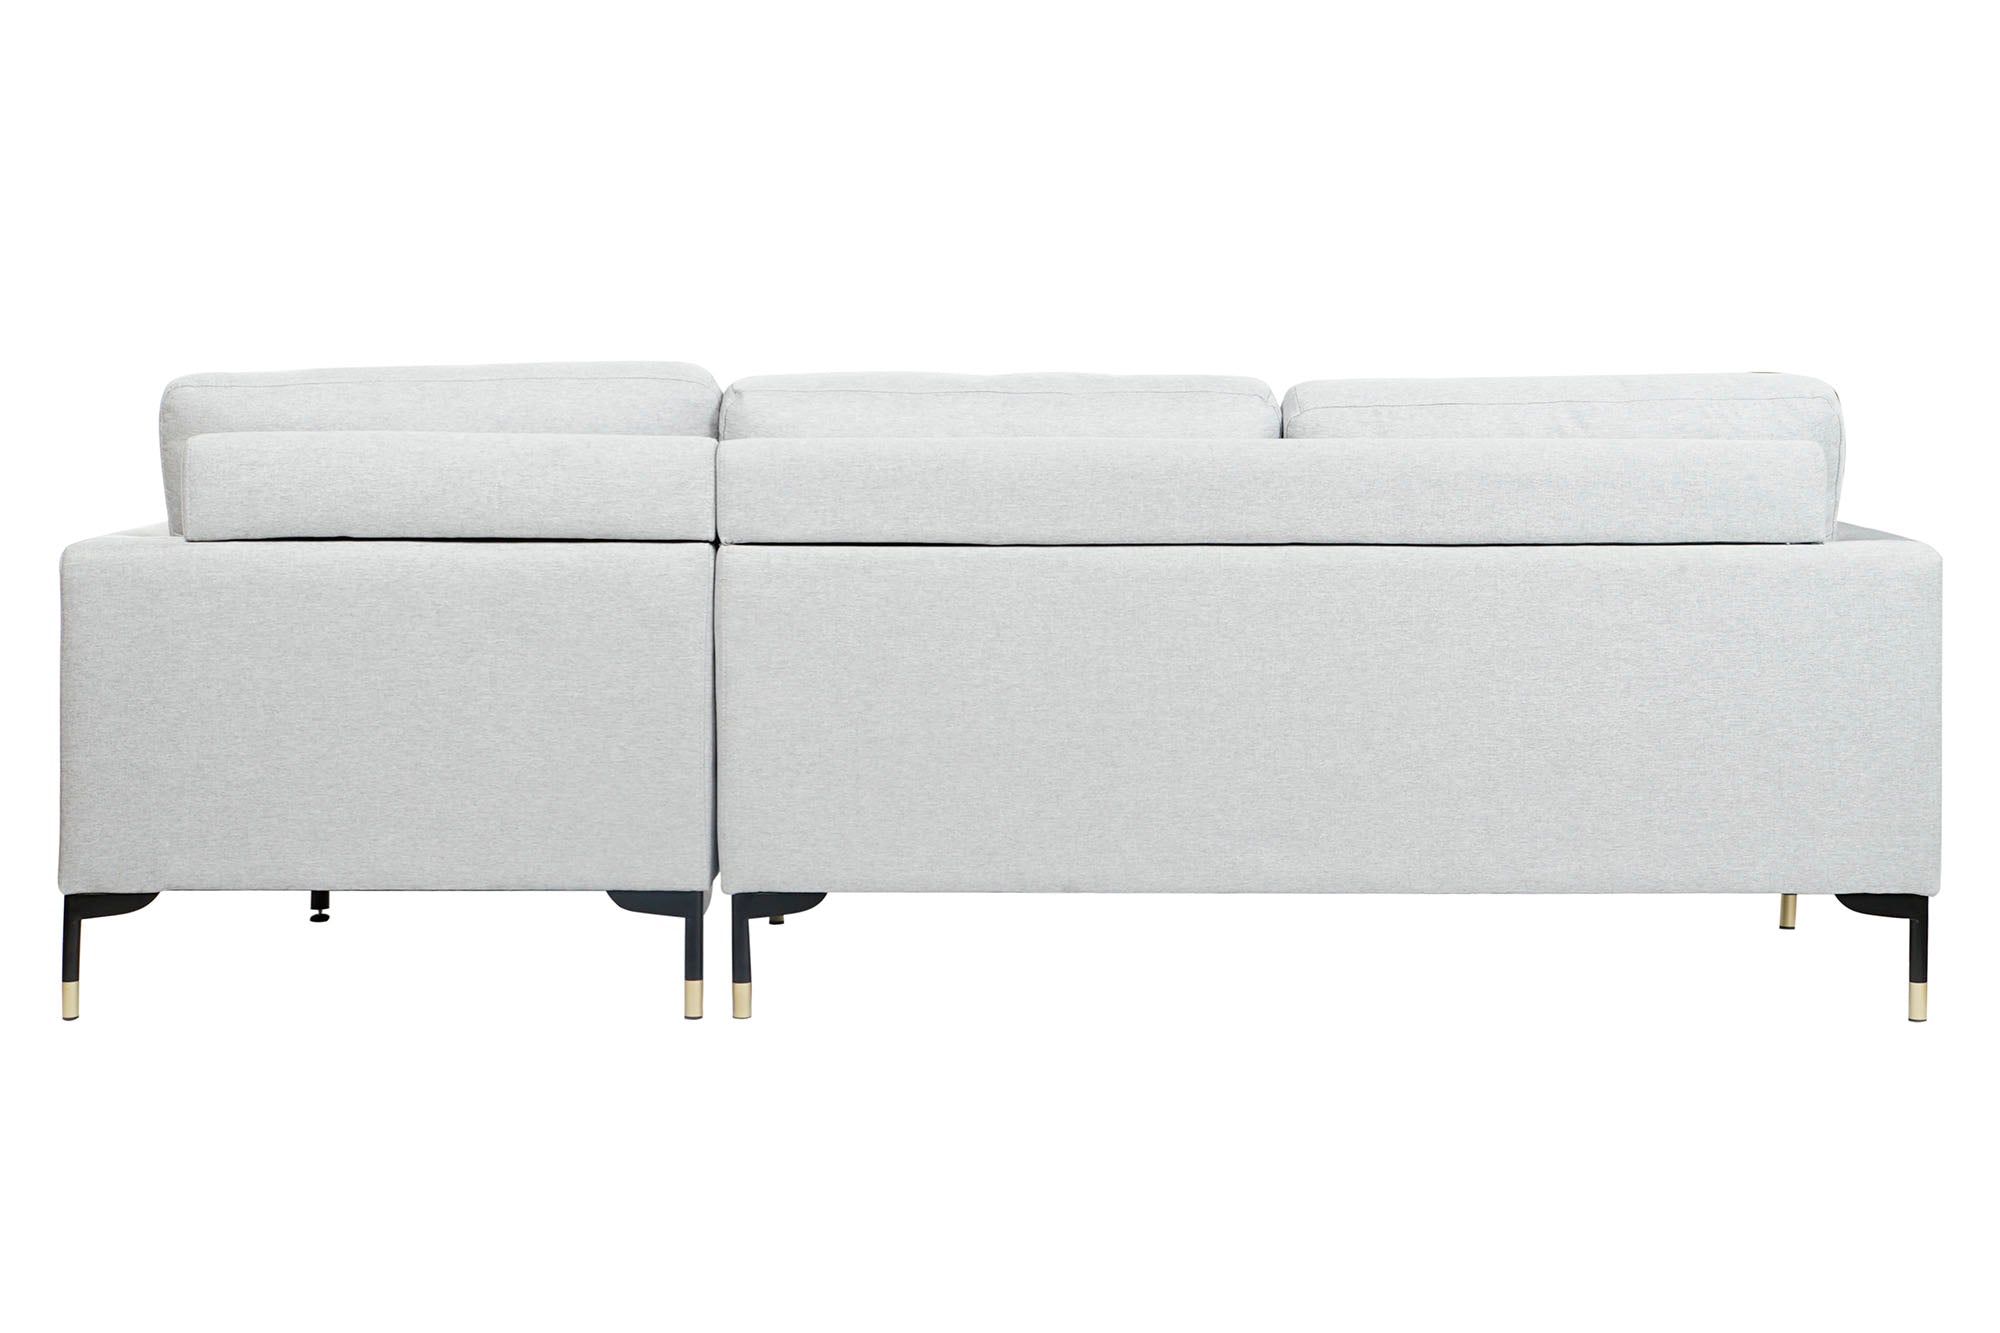 Sofa Metal Poliester 250X160X85 Chaiselonge